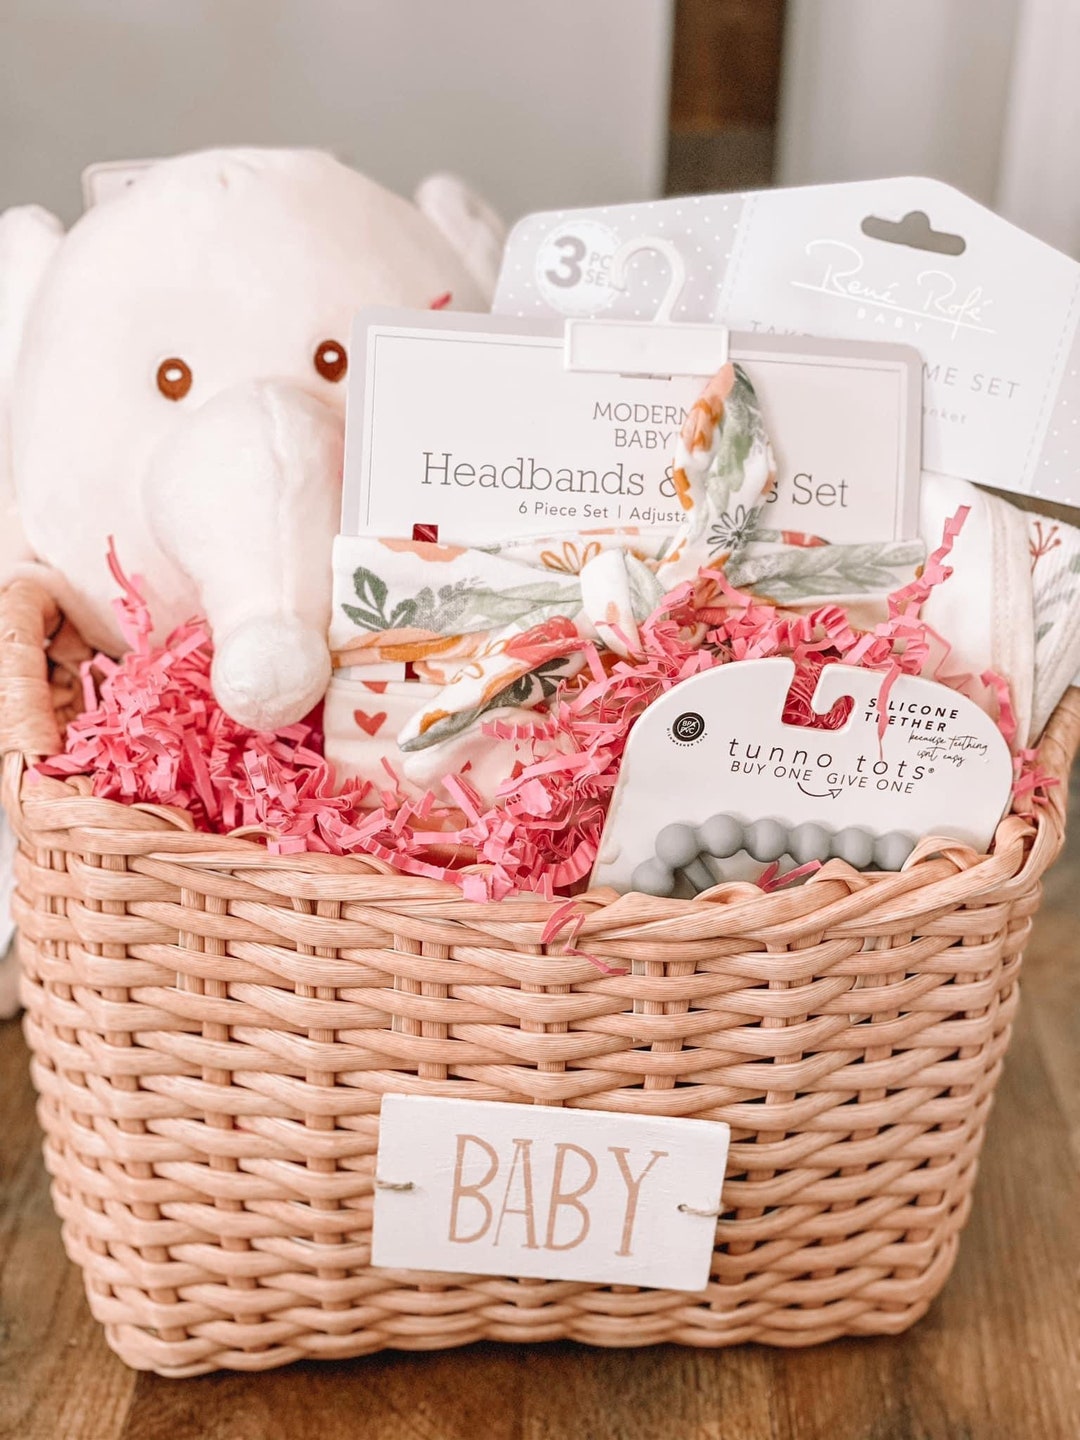 Baby Girl/ Baby Gift Basket/ Gifts for Baby Girl/ Gift for Newborn Girl/  Girl Baby Shower Basket/ Office Baby Shower Gift/ Gift for New Mom